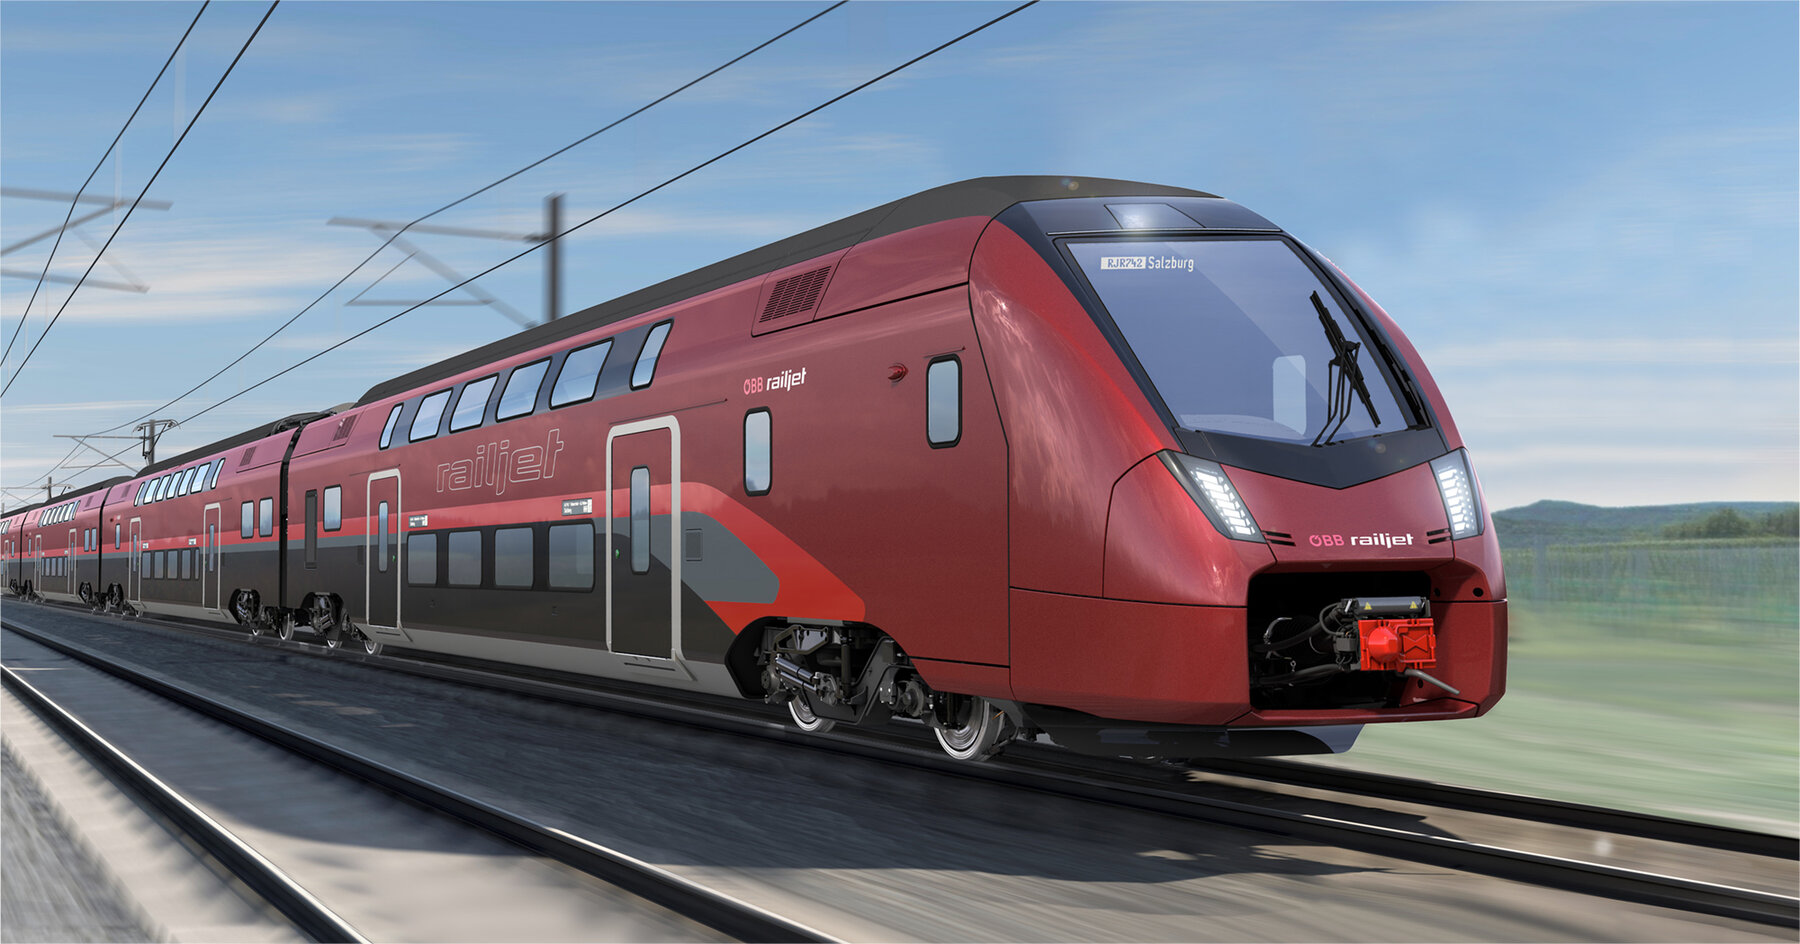 A rendering of a Stadler double-decker KISS train for Austrian Federal Railways